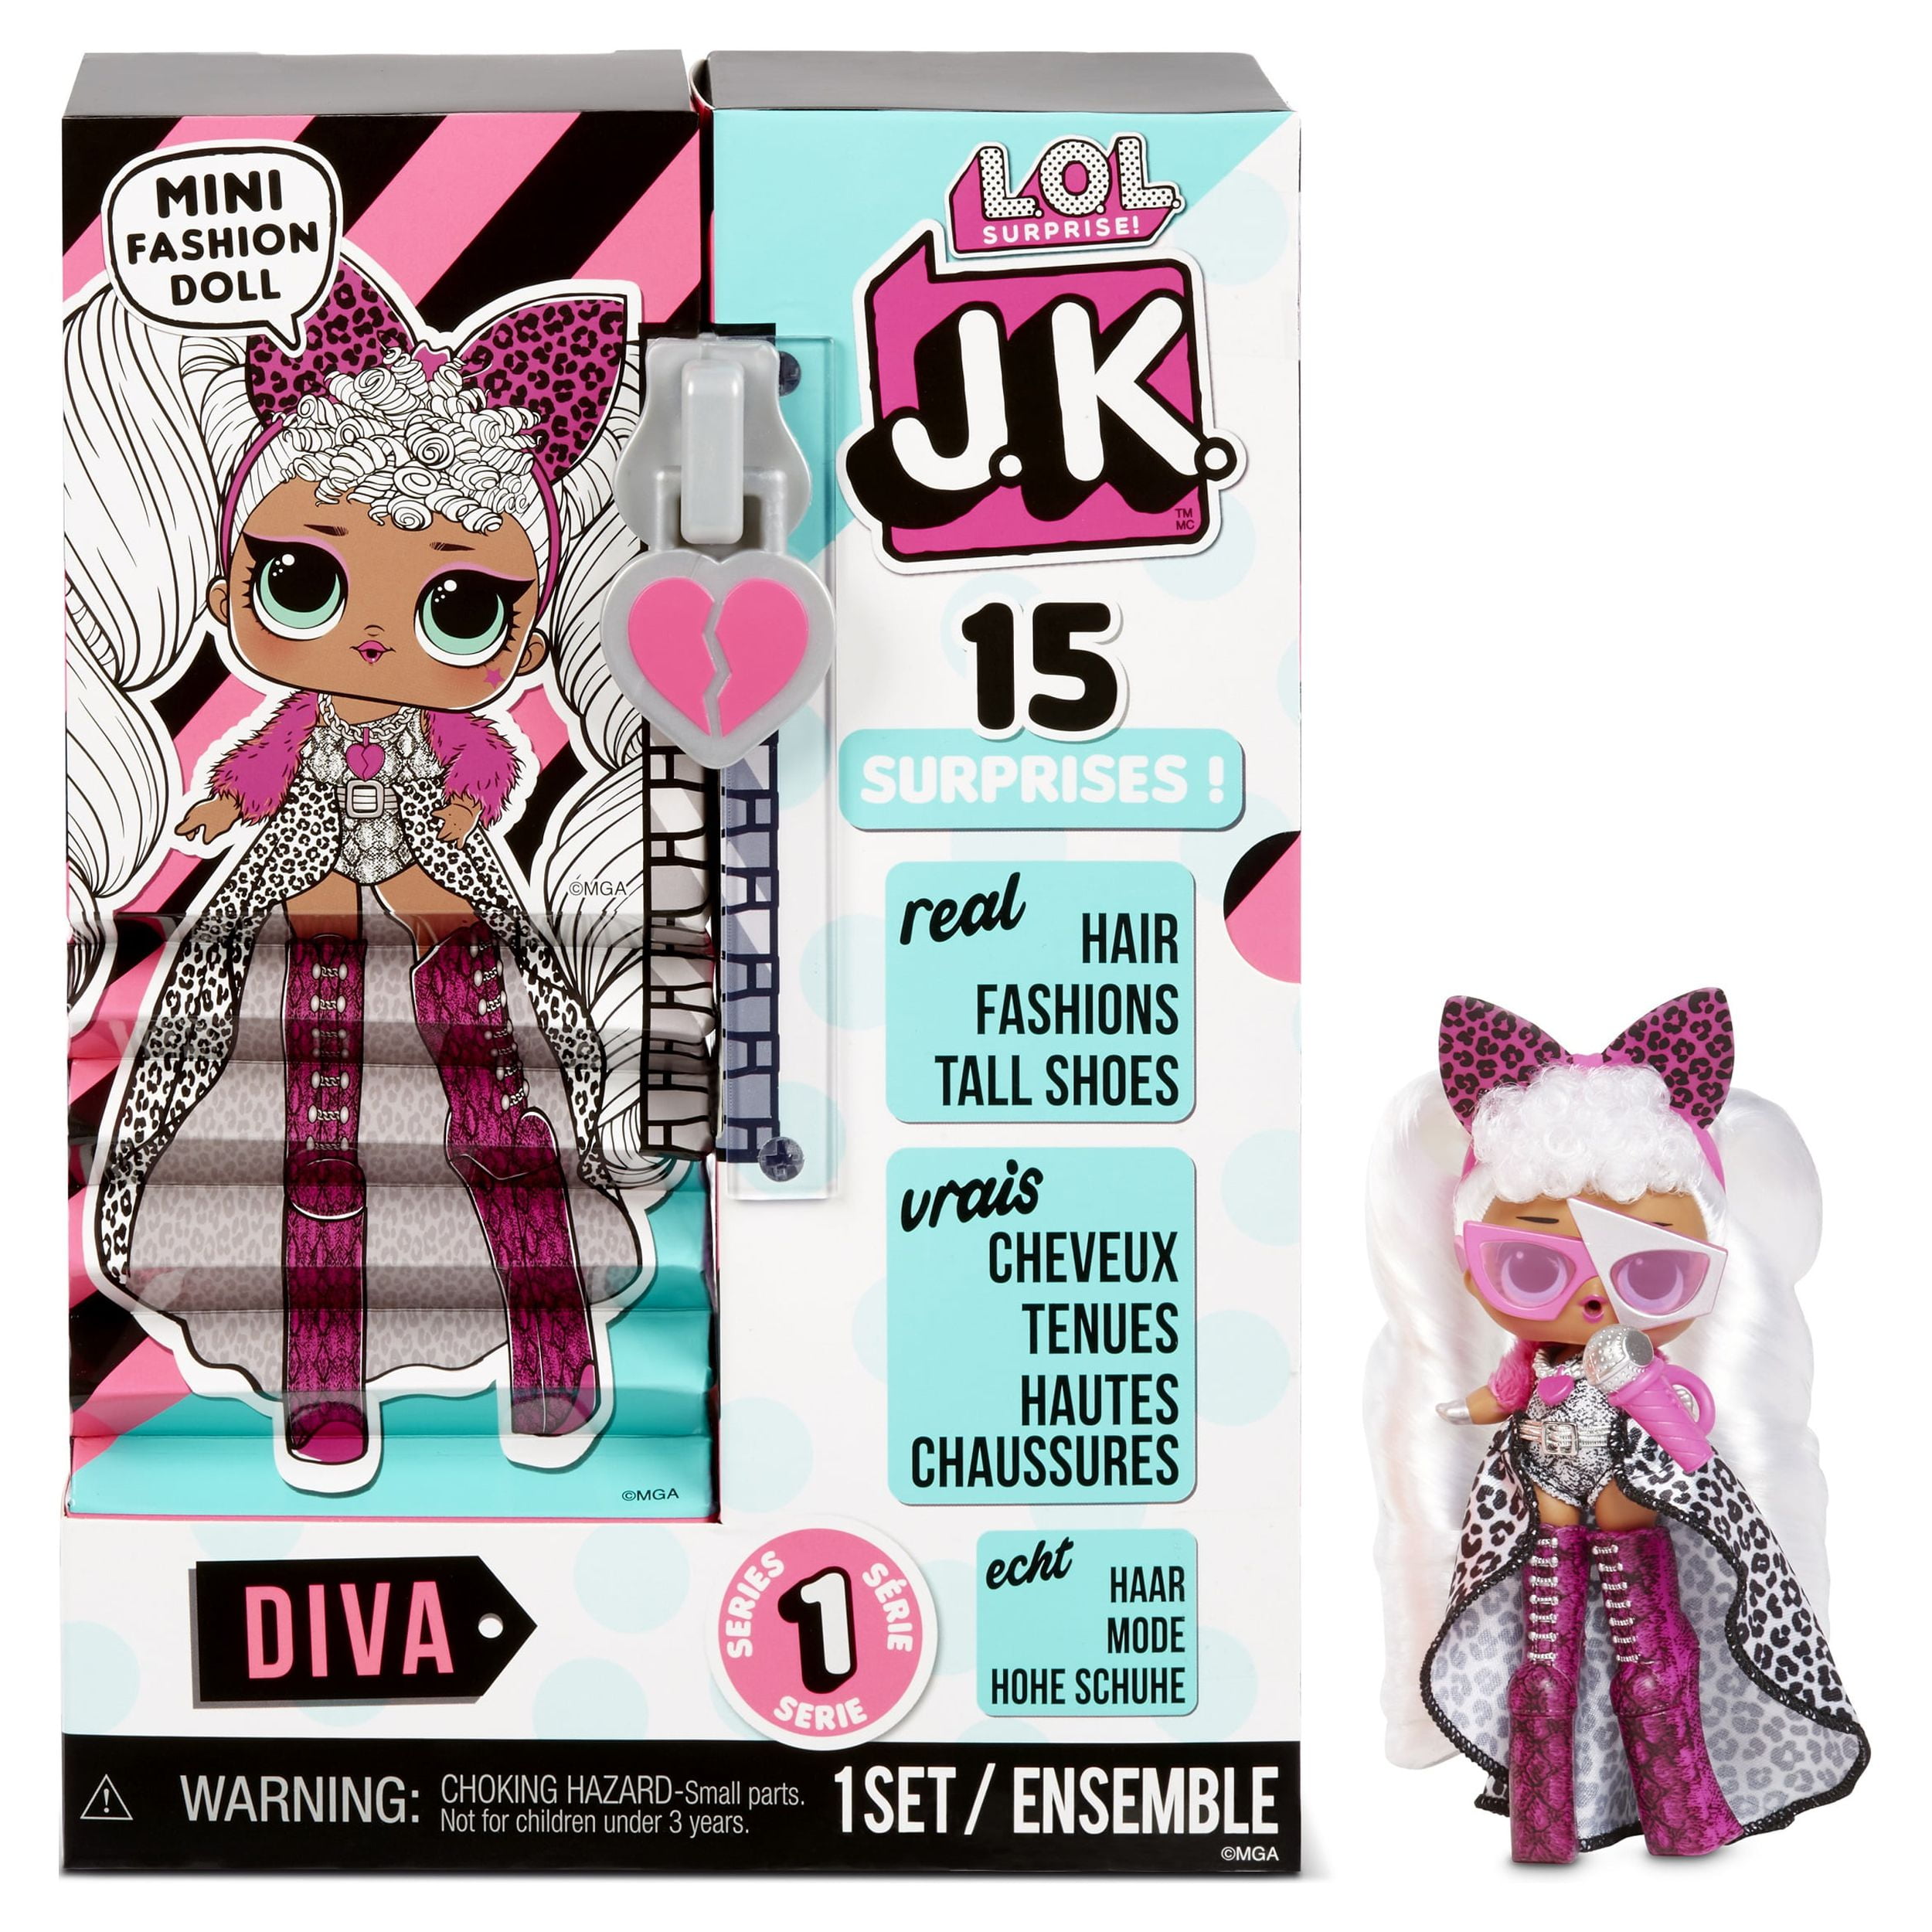 LOL Dolls set, including full size bag, doll, mini doll, full size glasses  and dummy!